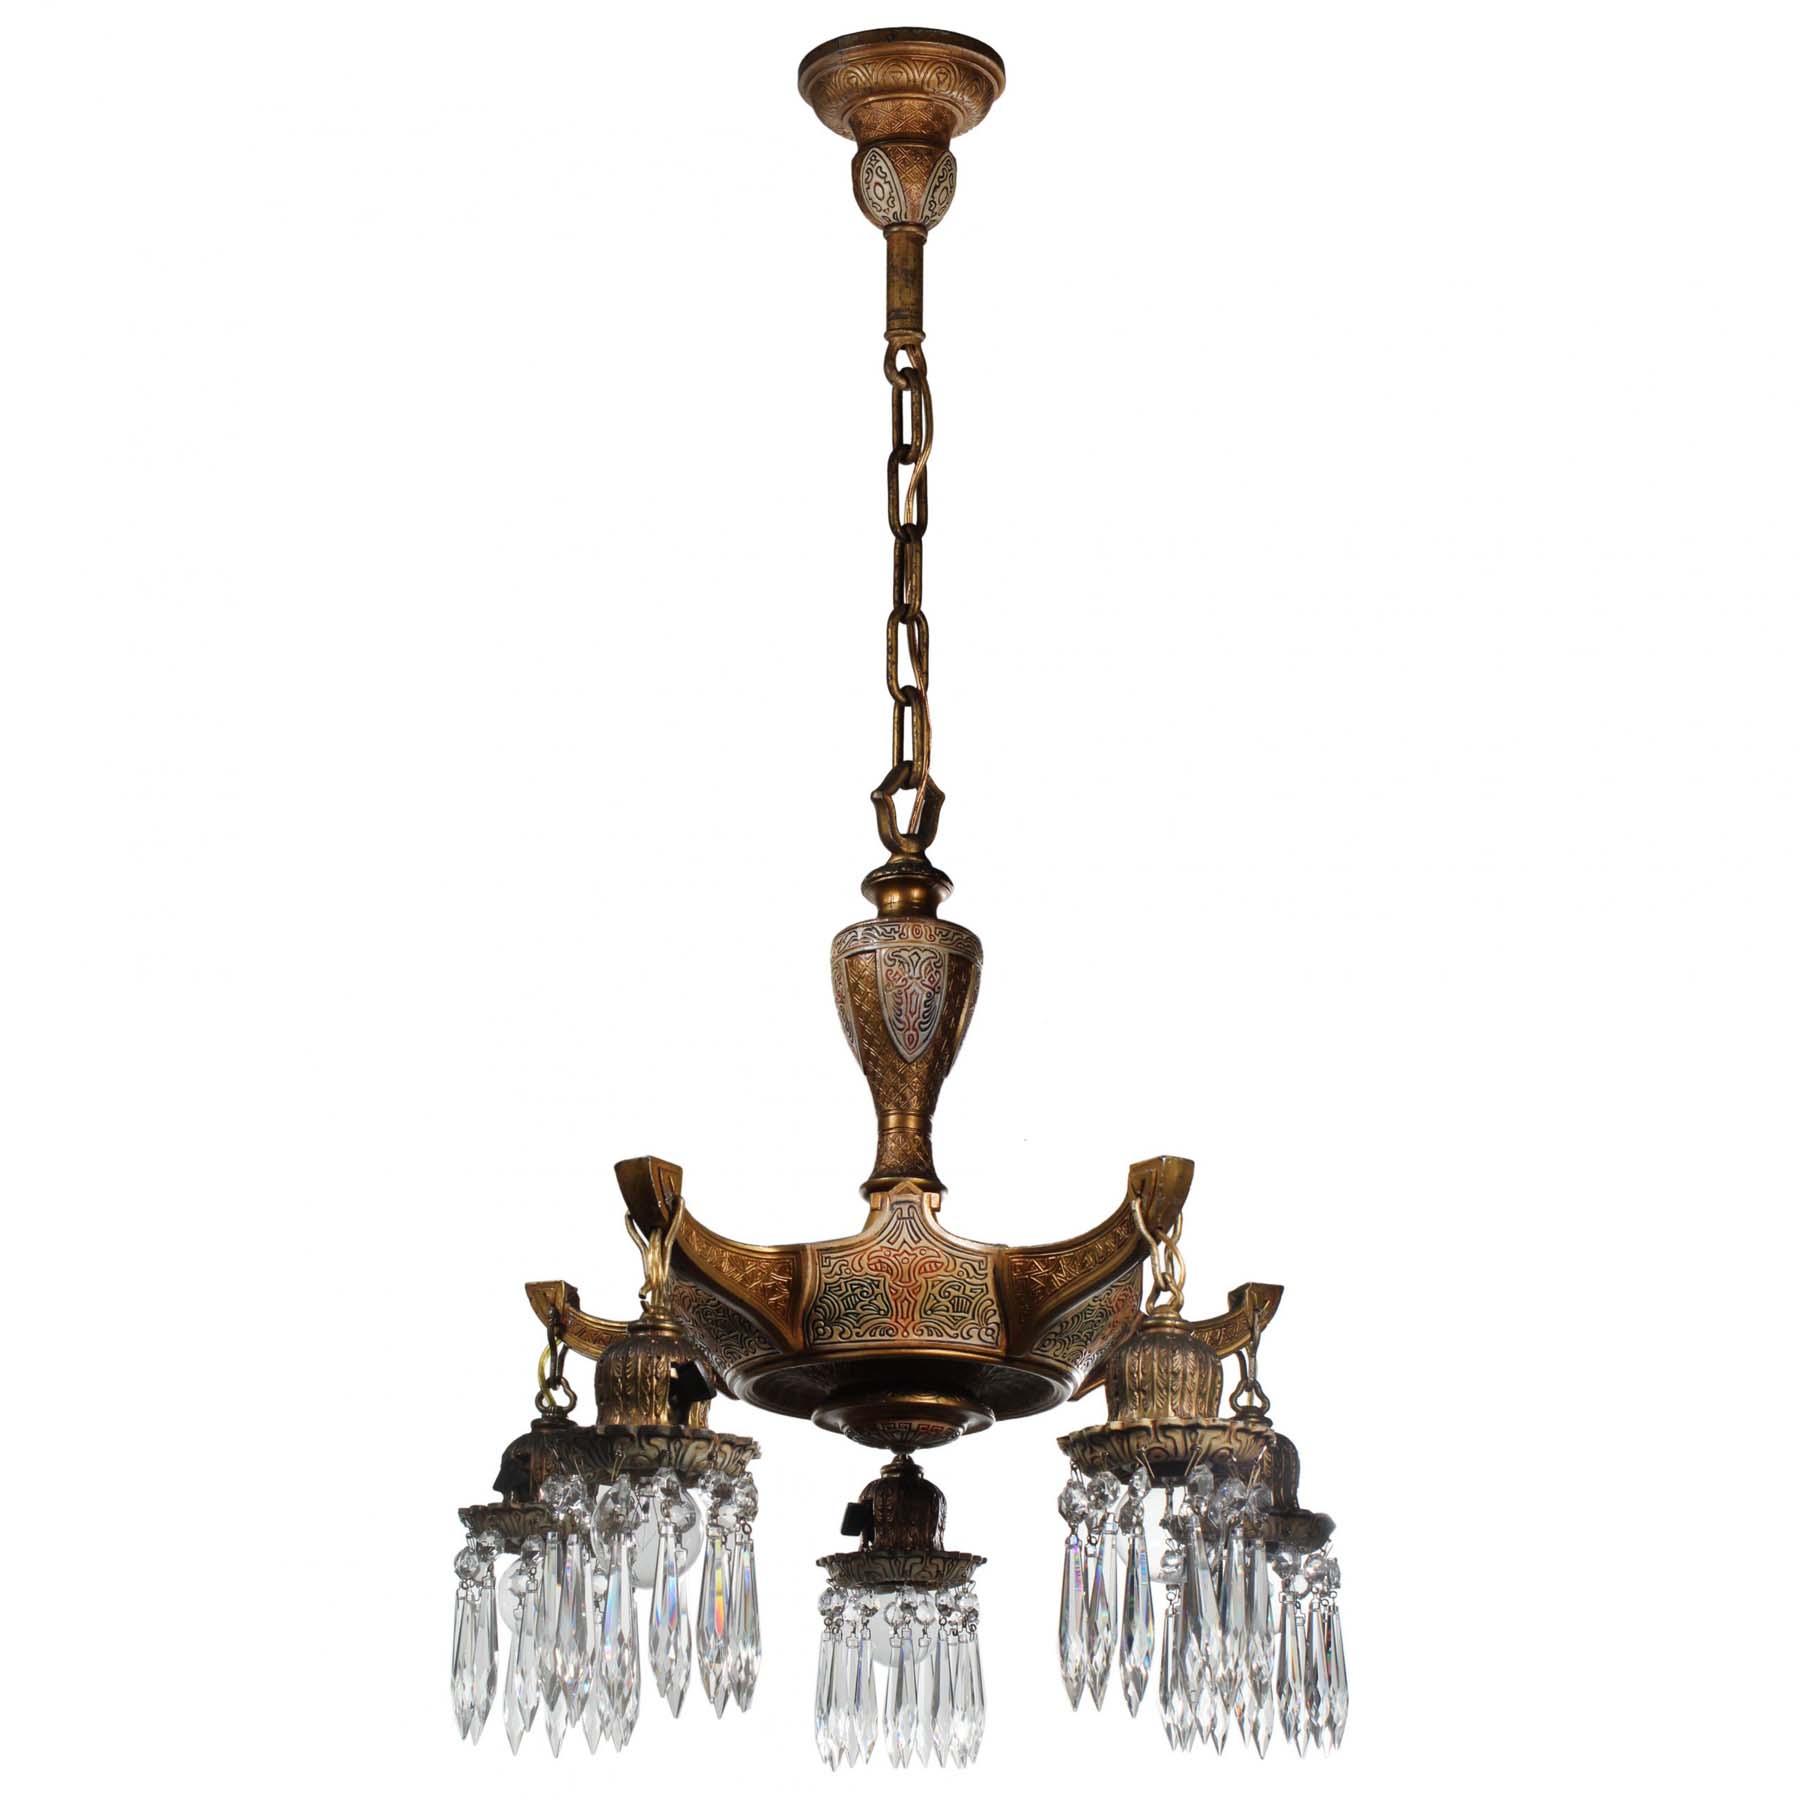 SOLD Antique Spanish Revival Chandelier, Empire Lighting-69980